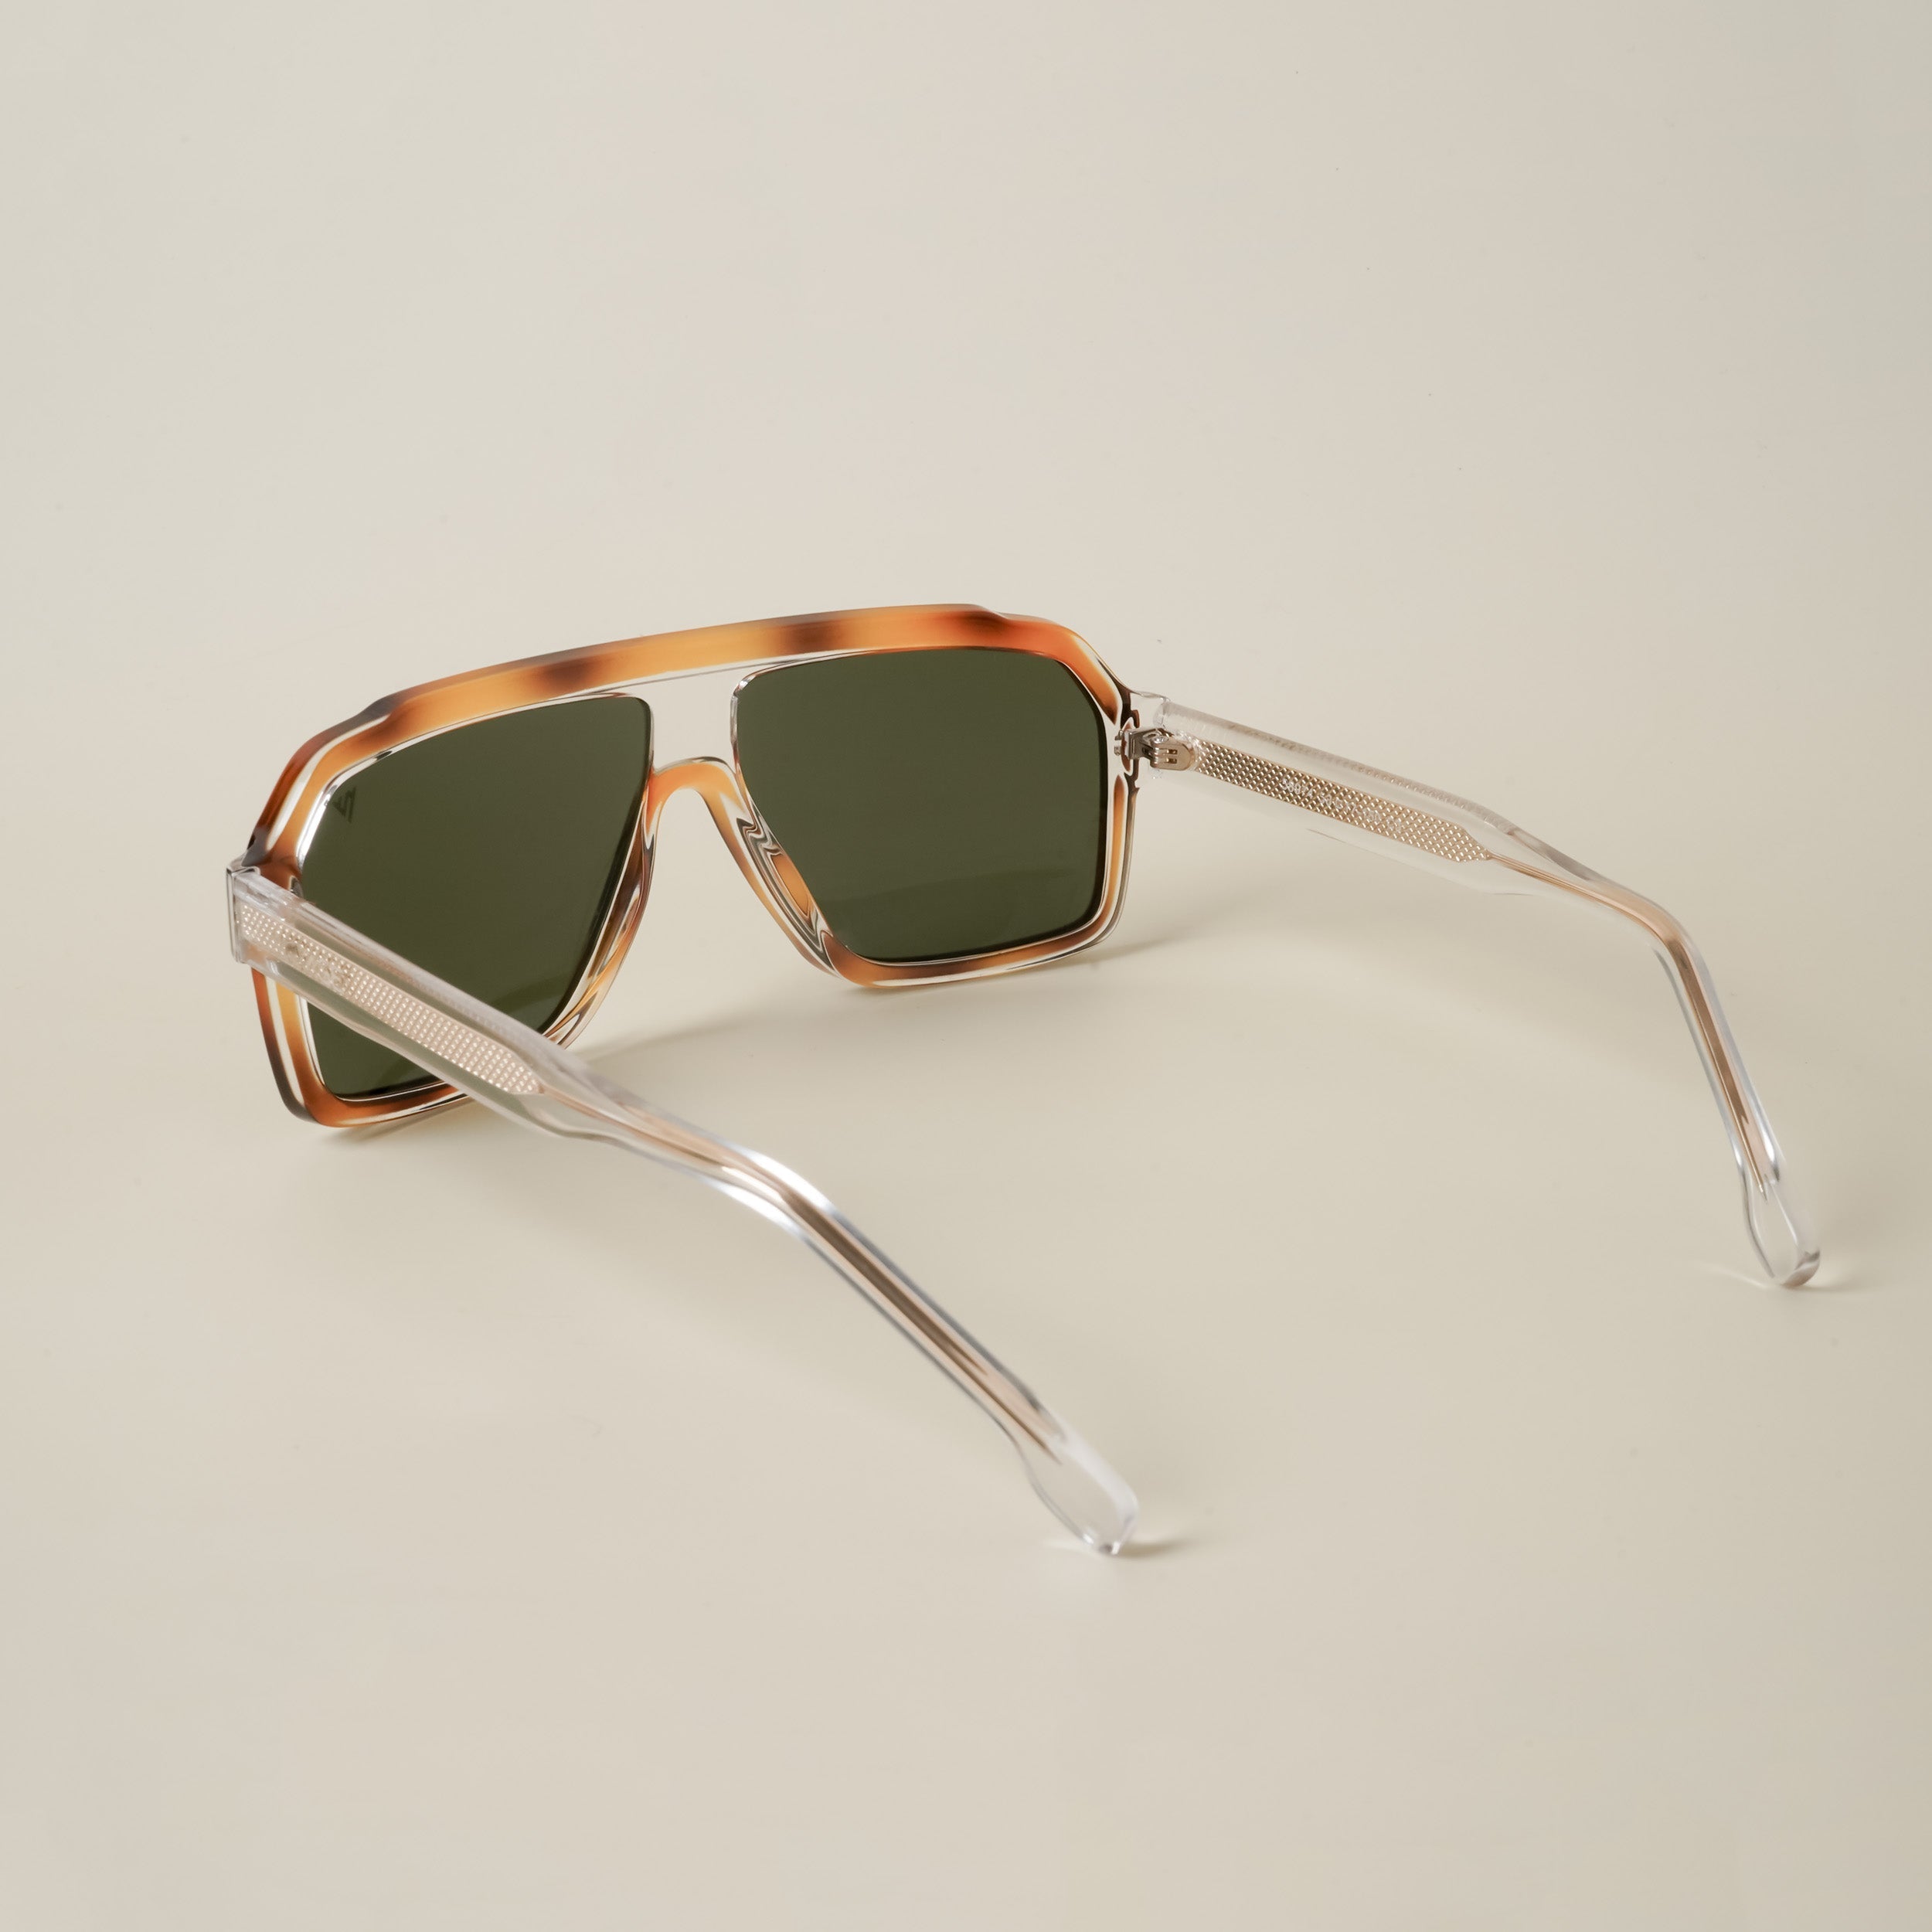 Voyage Green Wrap Around Sunglasses for Men & Women - MG4747